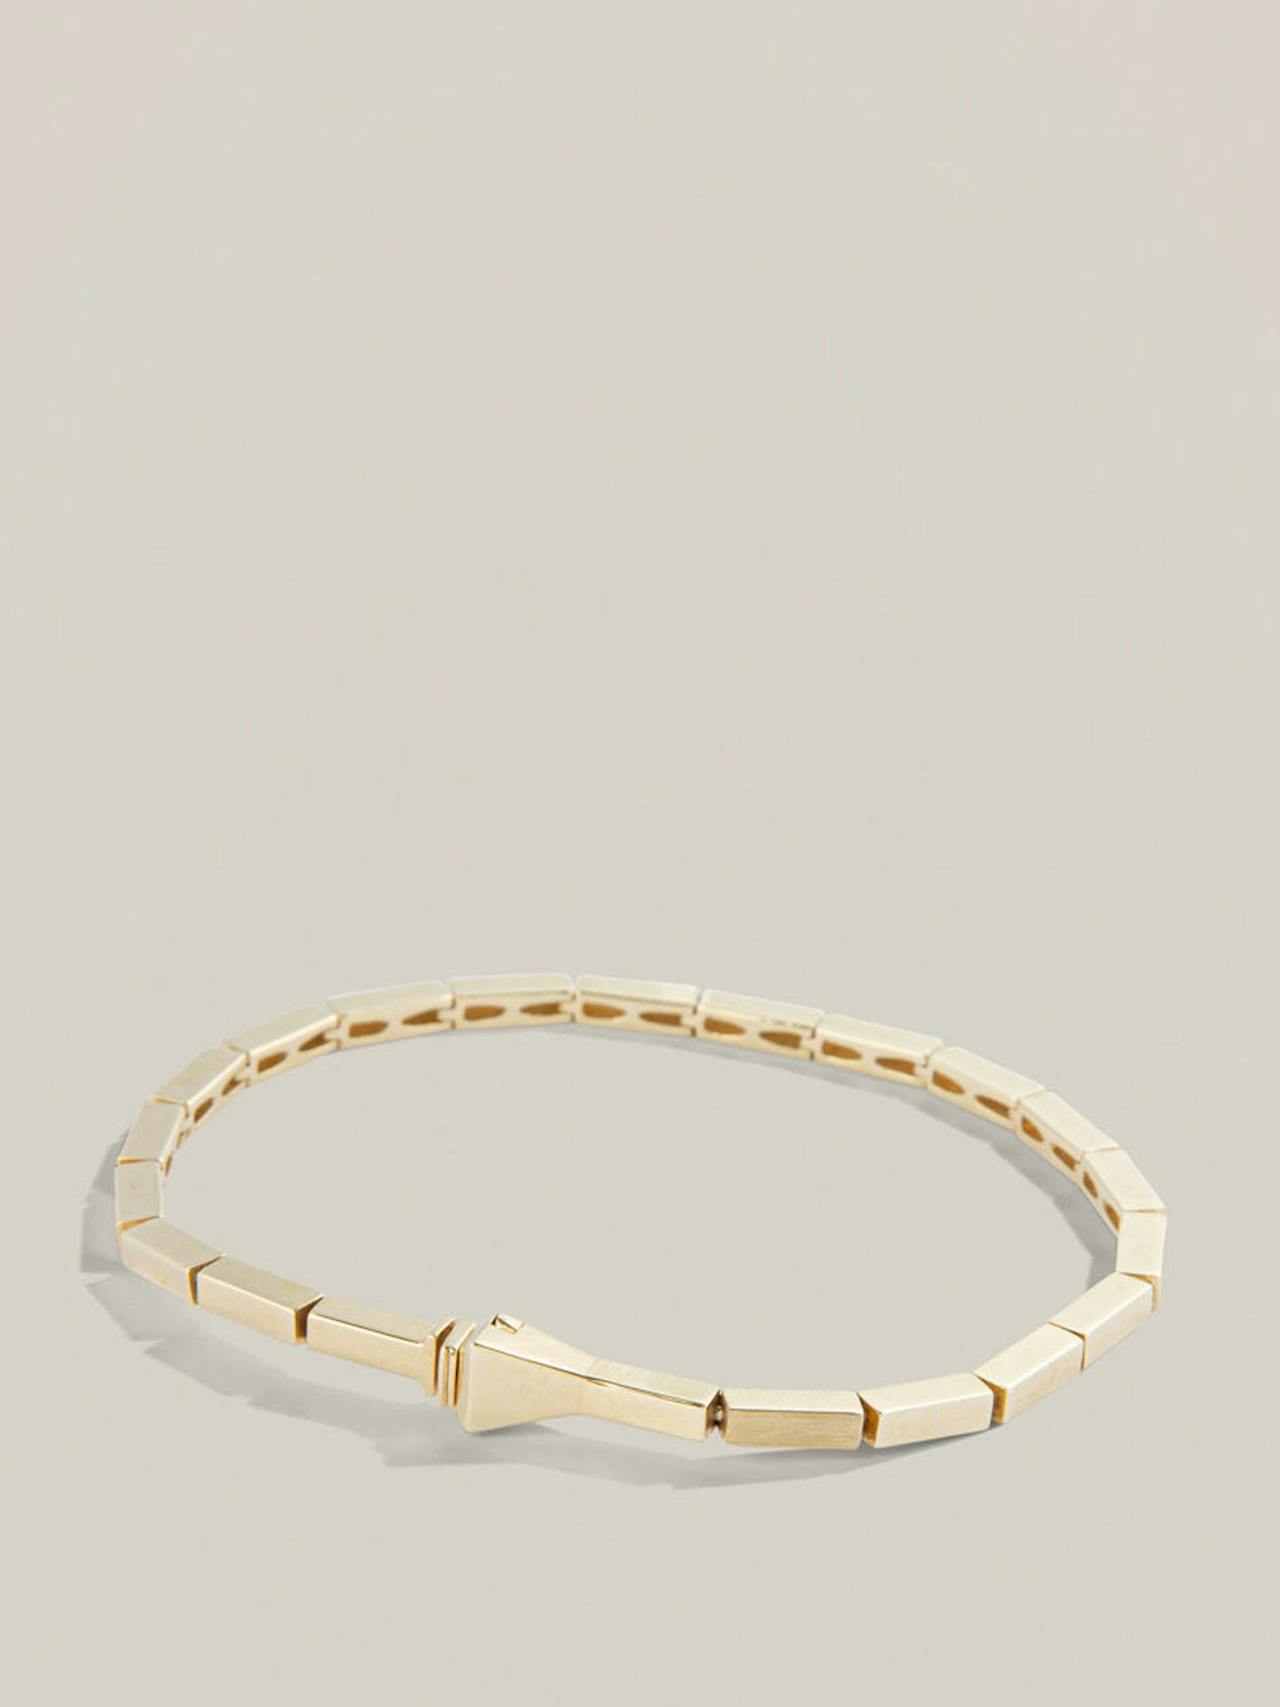 The Lucky One gold bar bracelet